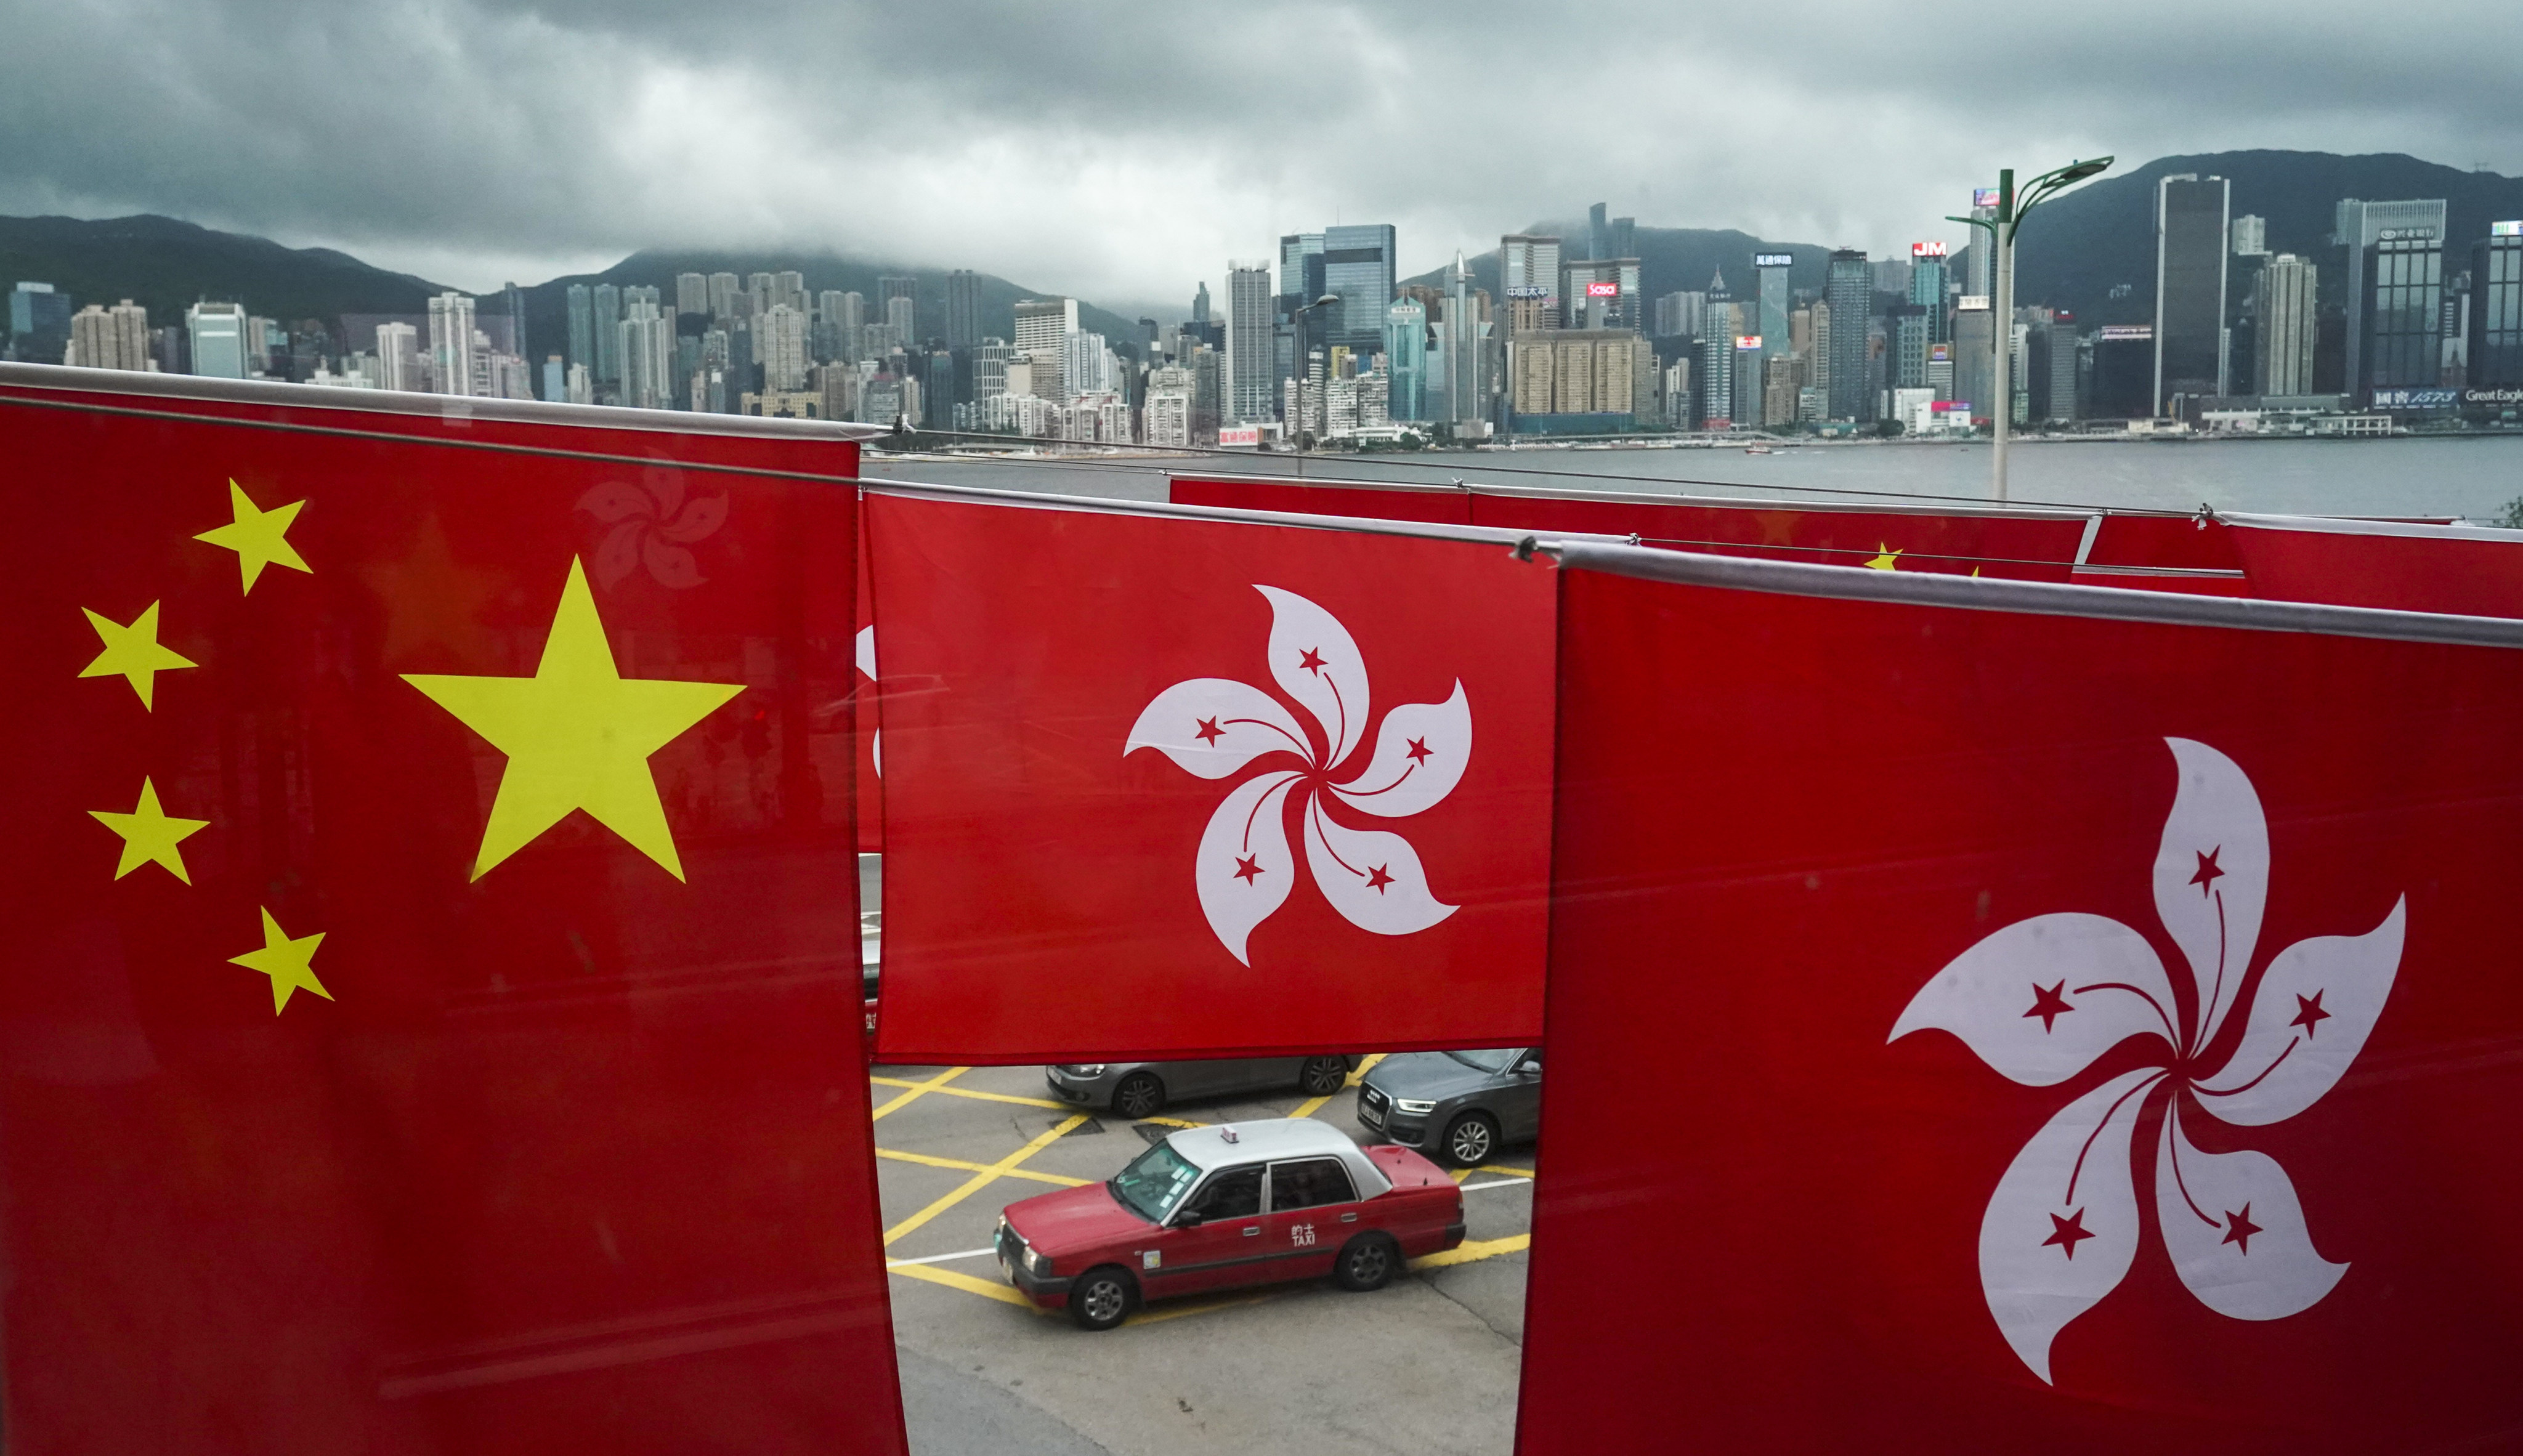 The flags of China and Hong Kong SAR are displayed to celebrate the 25th anniversary of Hong Kong’s handover, in Tsim Sha Tsui on June 20. Photo: Felix Wong